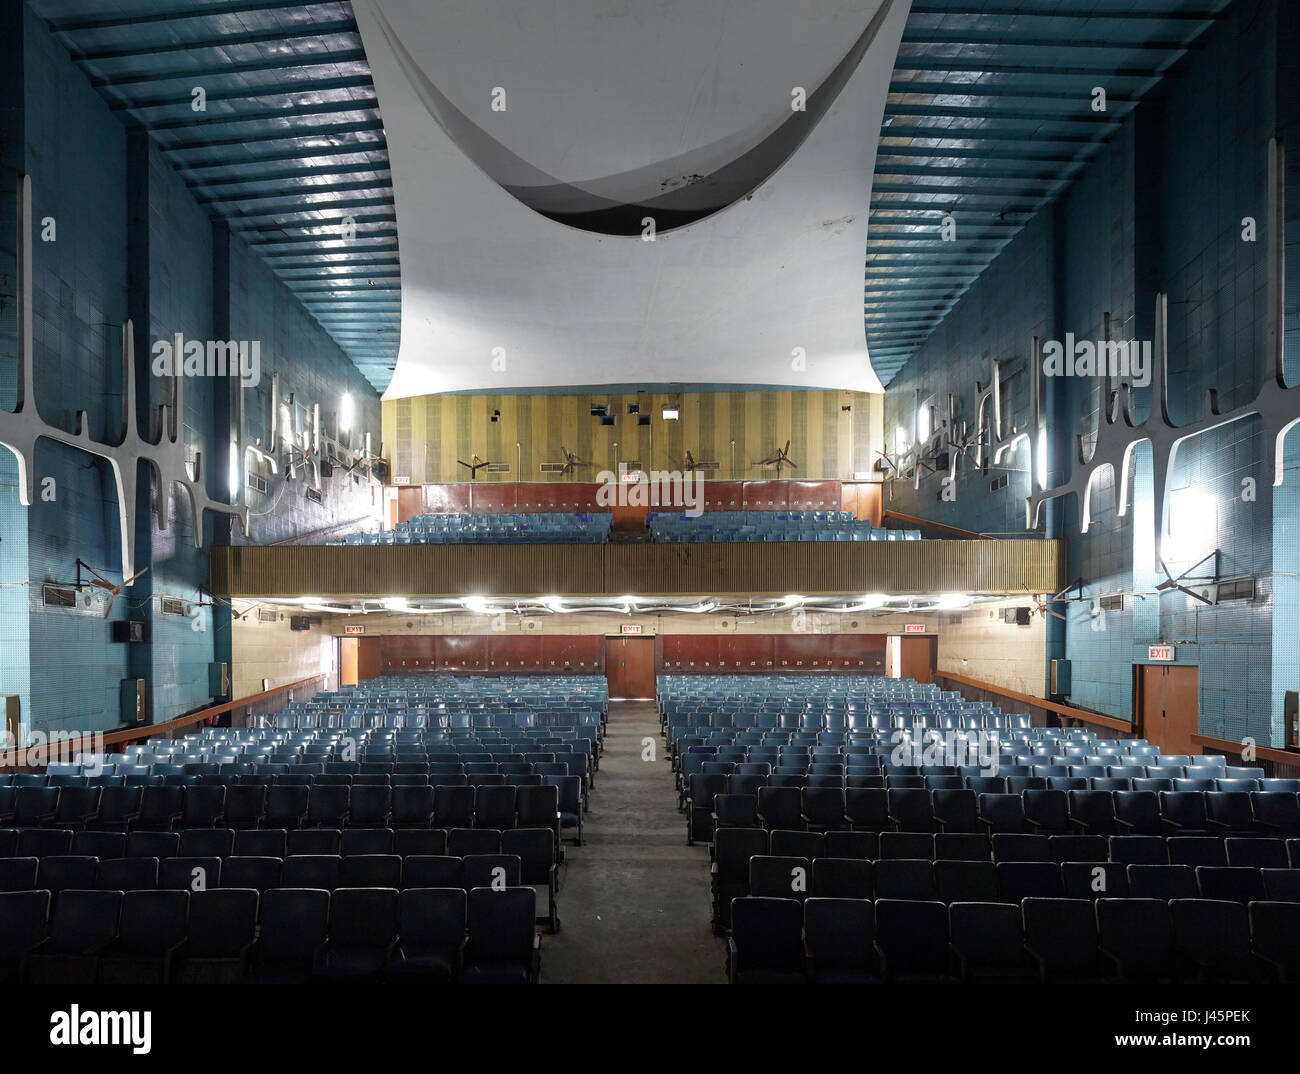 Overall cinema interior from stage. Neelam Cinema Chandigarh, Chandigarh, India. Architect: Le Corbusier, 1954. Stock Photo